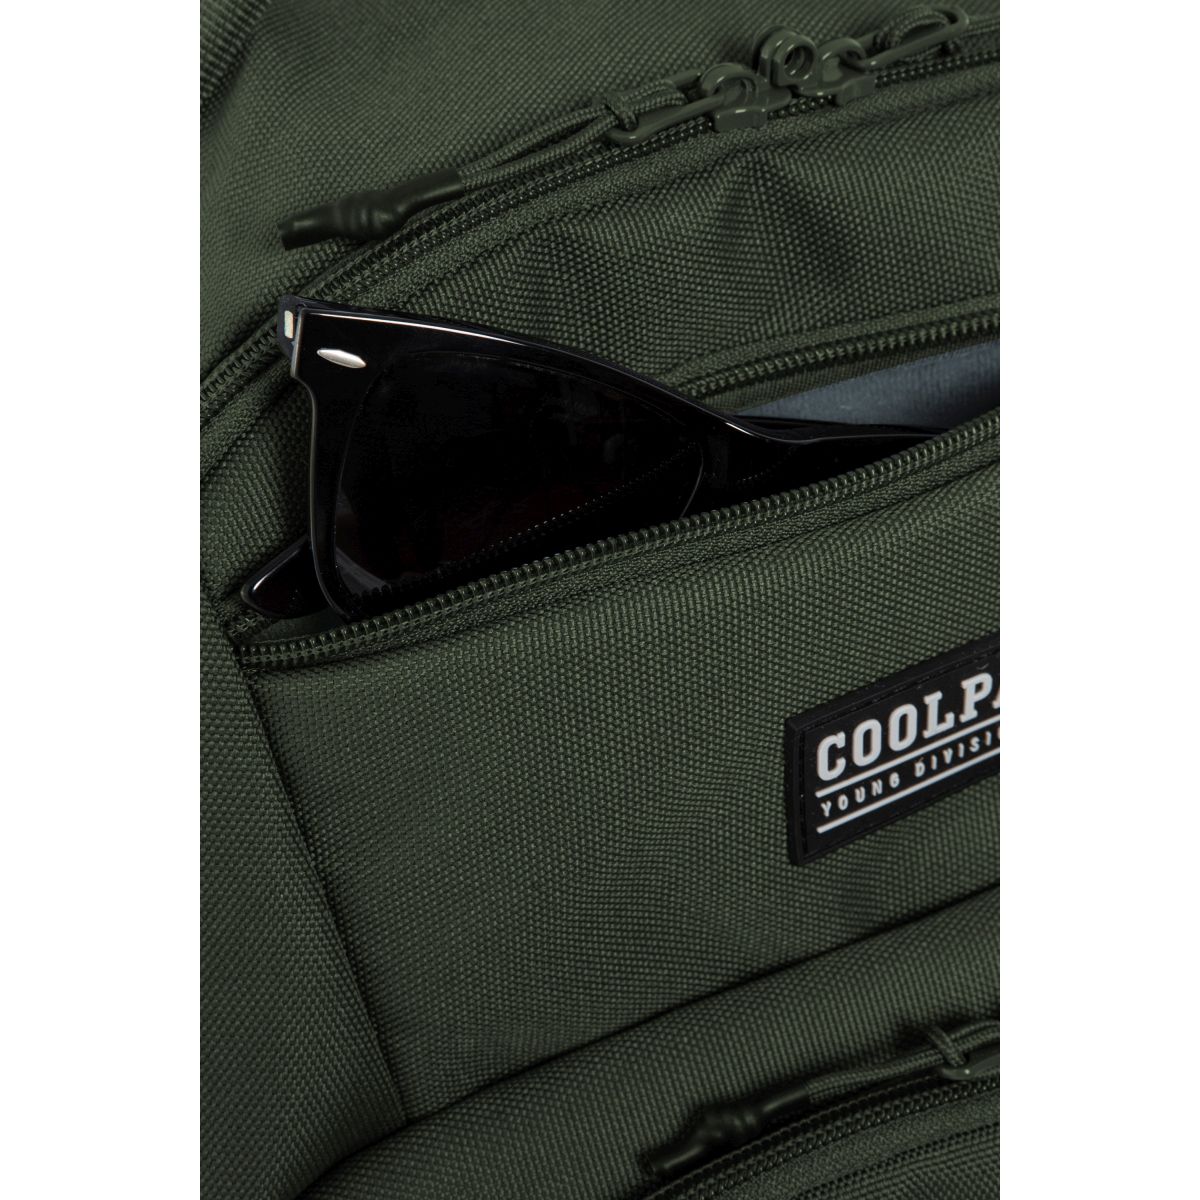 Plecak Patio cool pack ARMY (C39255)